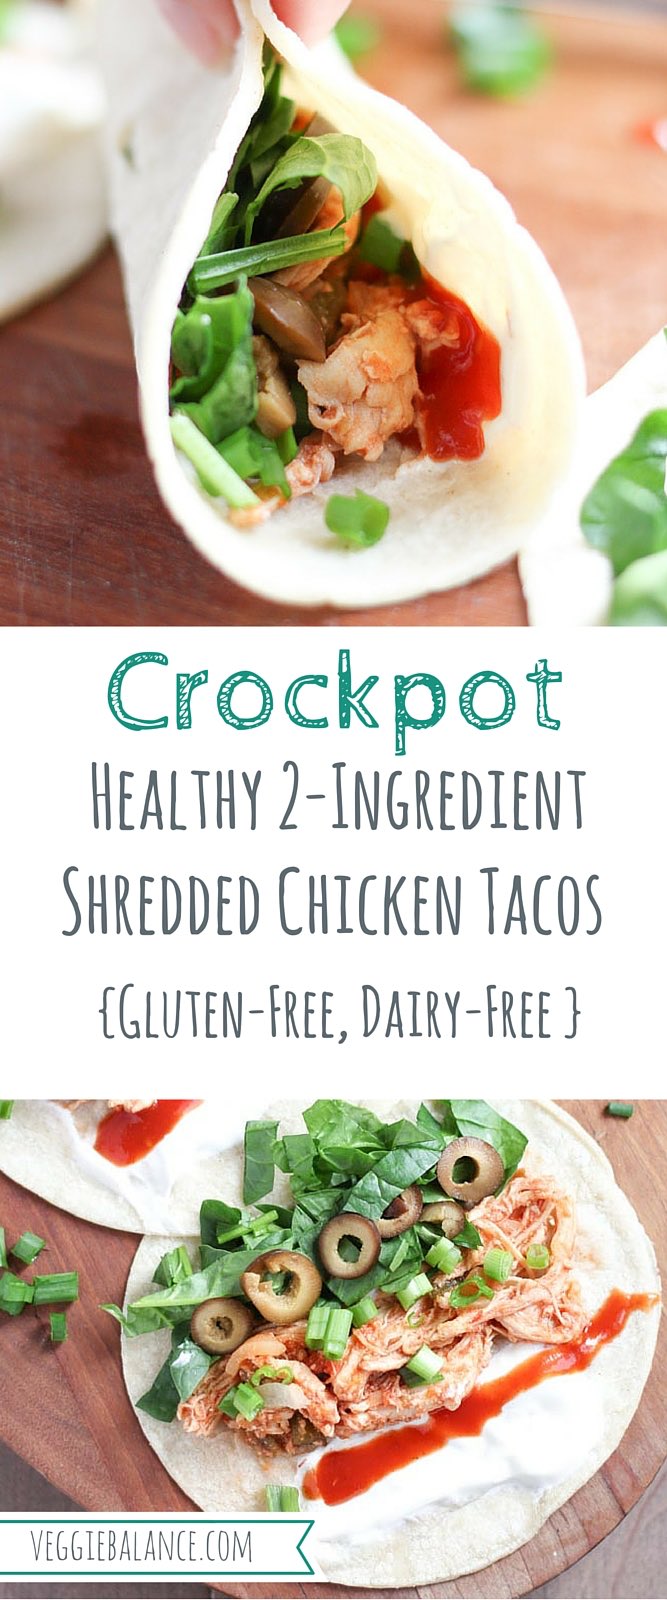 Veggie Balance — Crockpot Shredded Chicken Tacos